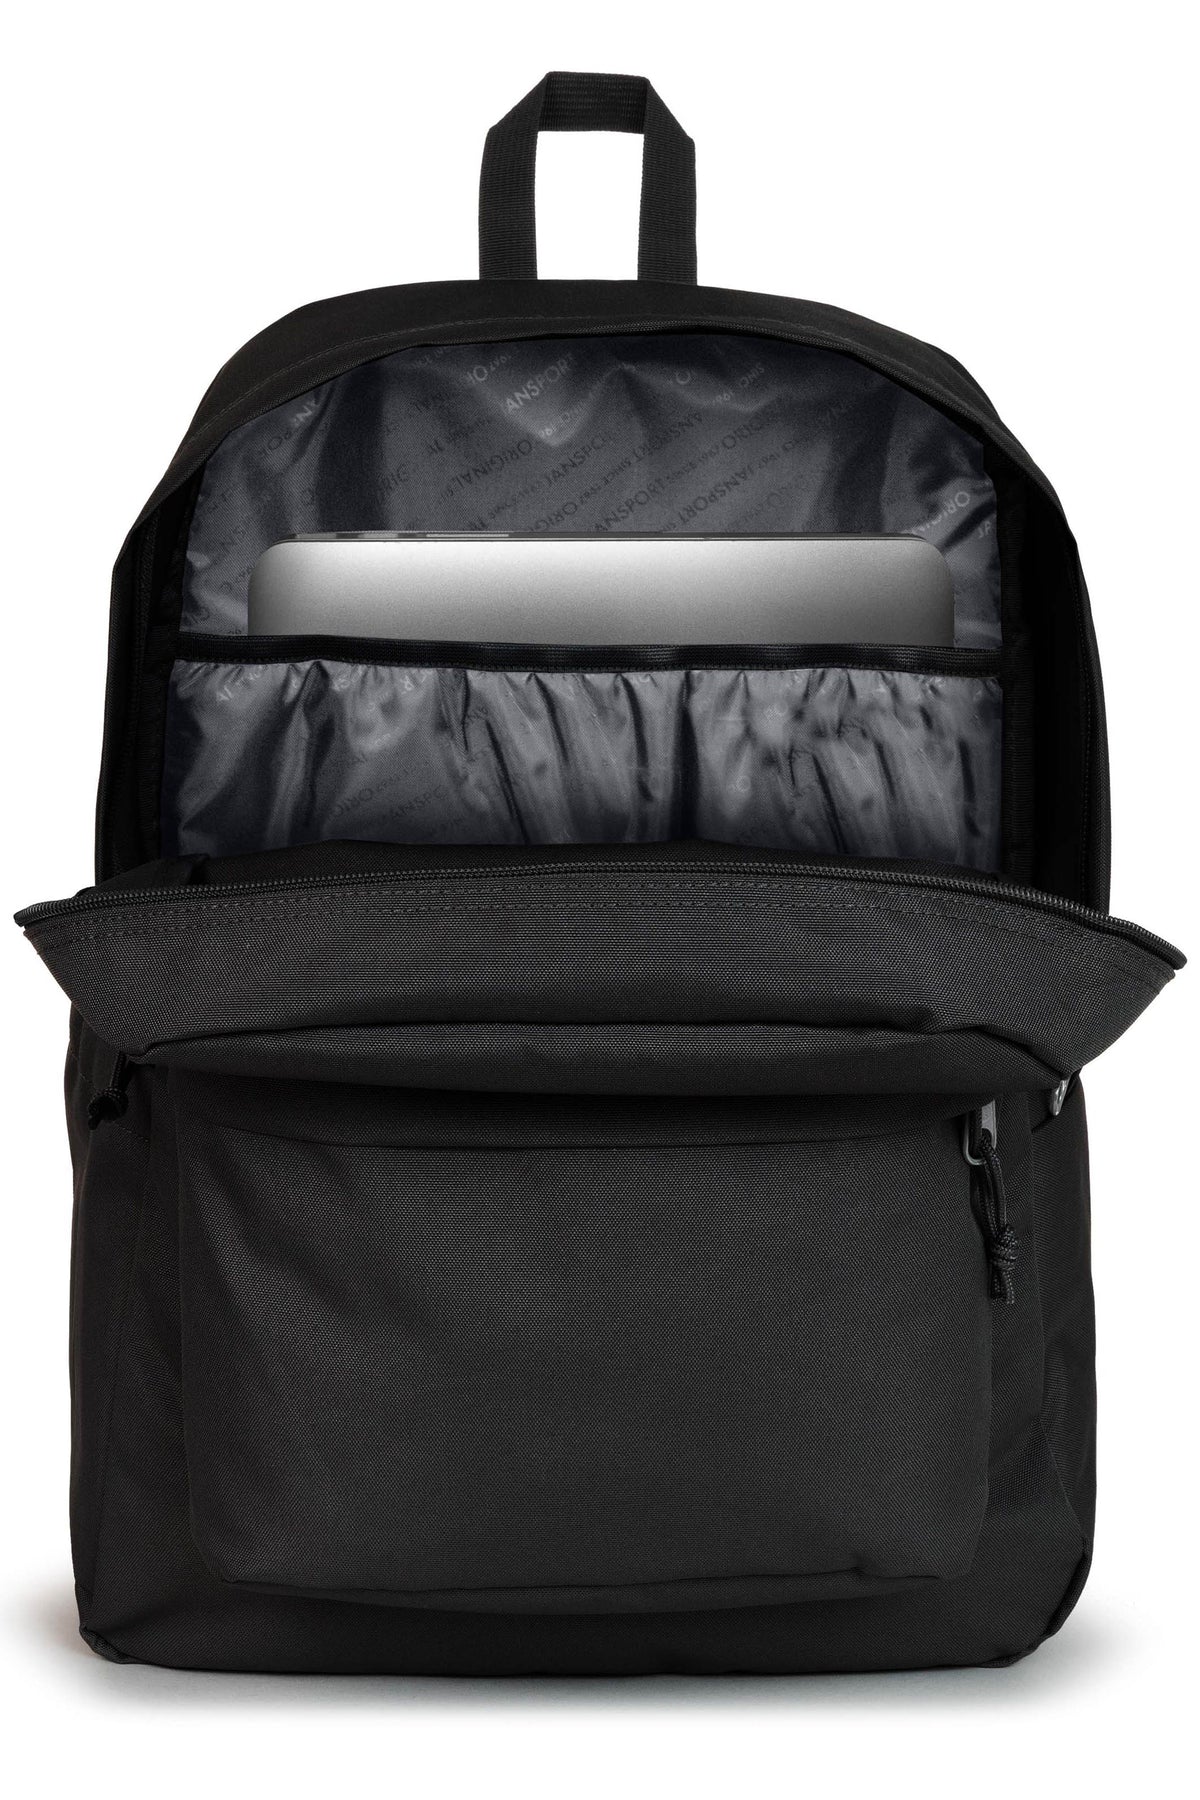 Jansport Superbreak Plus Backpack - Black – thebackpacker